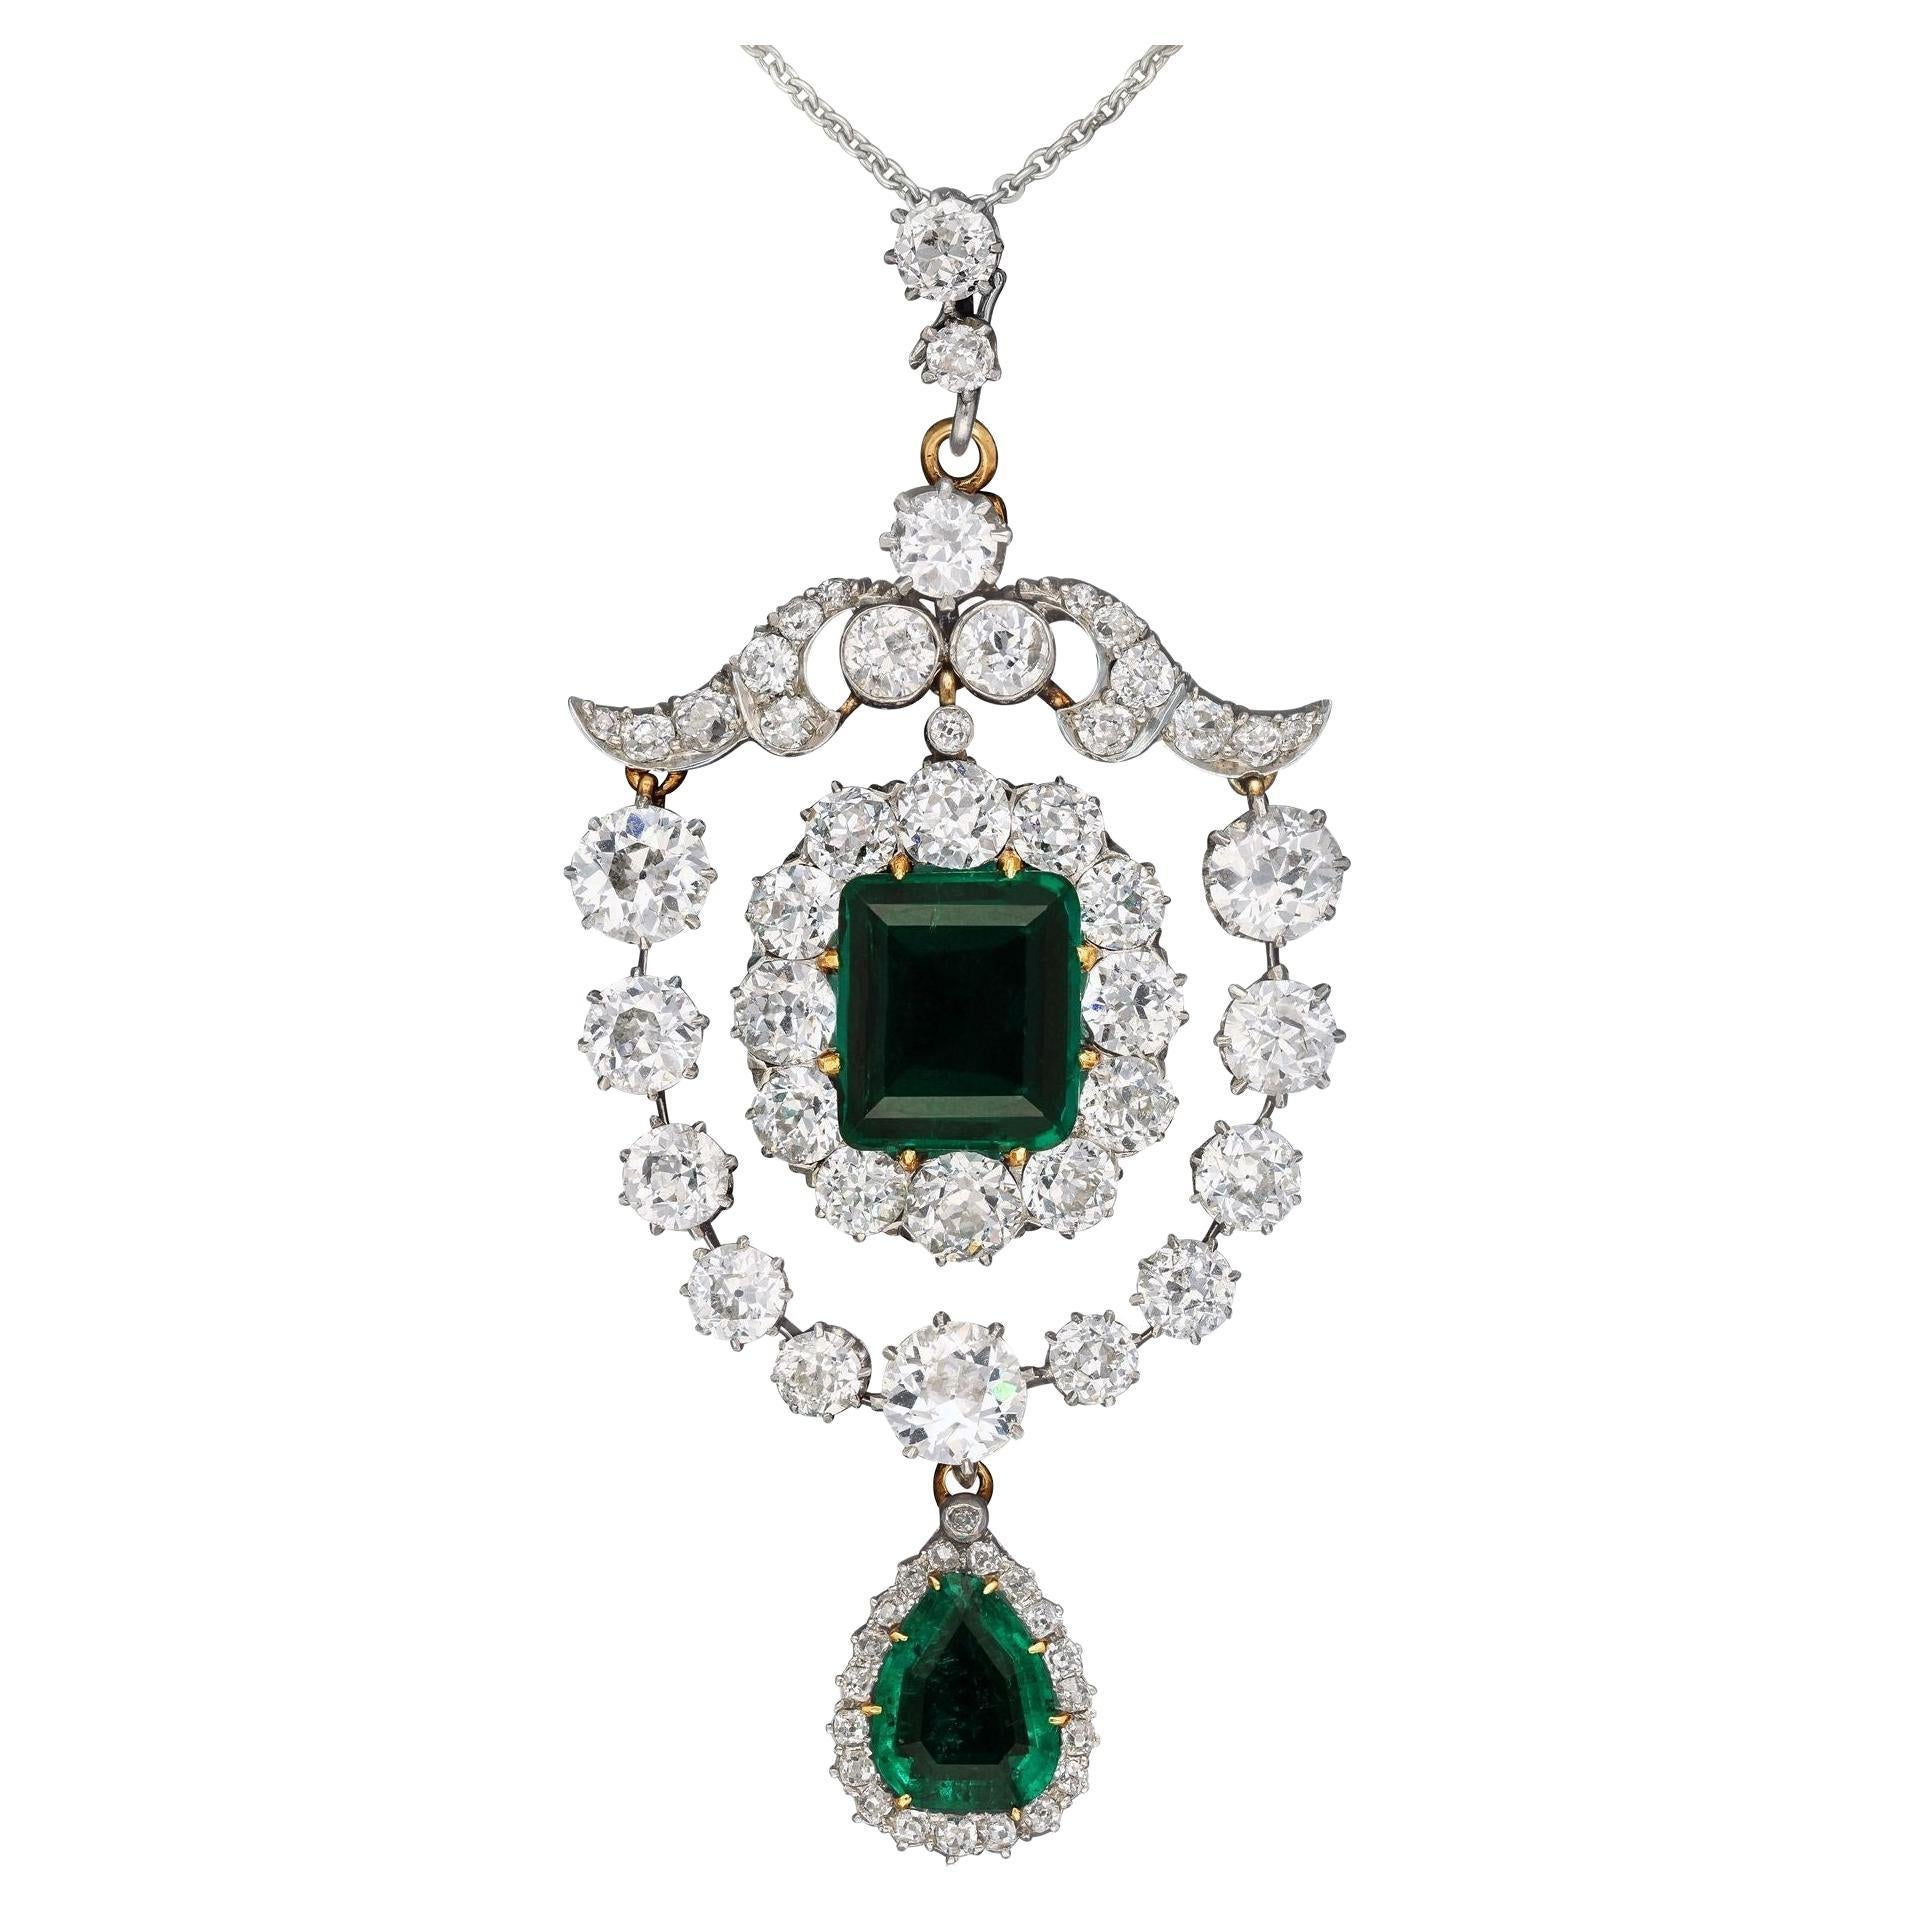 Edwardian circa 1910 Colombian Emerald Diamond and Platinum Pendant